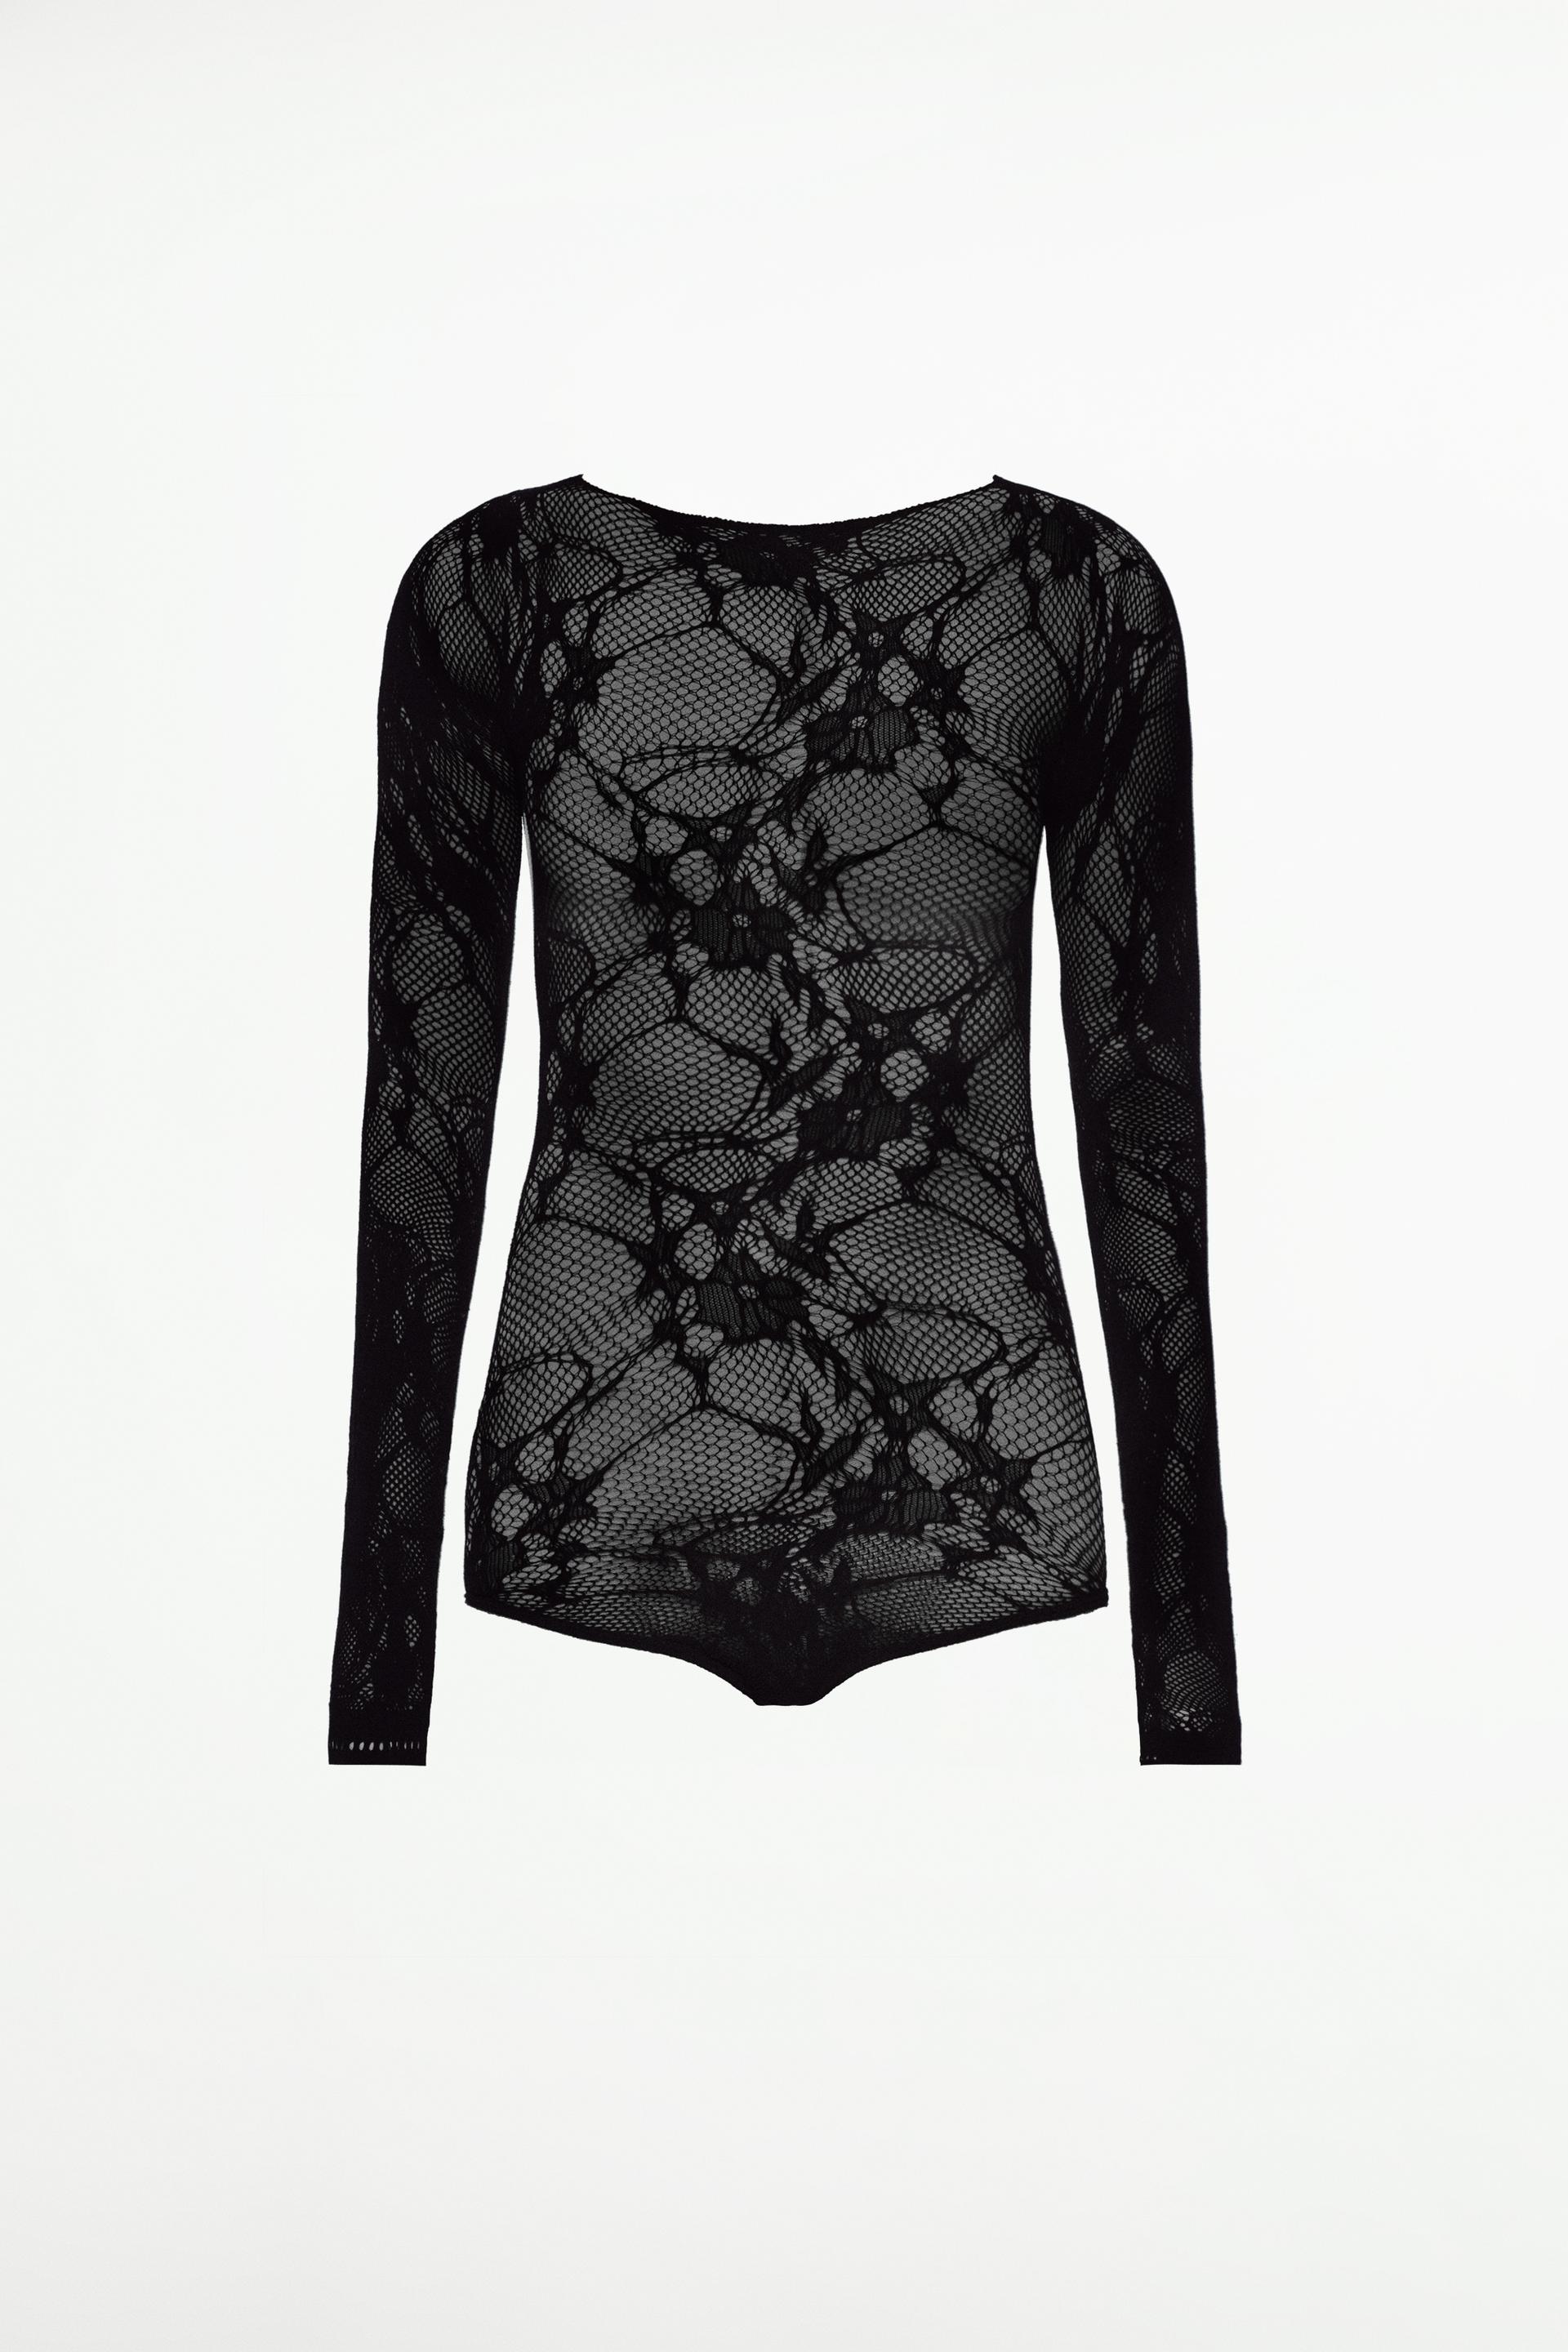 Zara Black Bodysuit Puffy Long Sleeve Square Neck Top Size Small